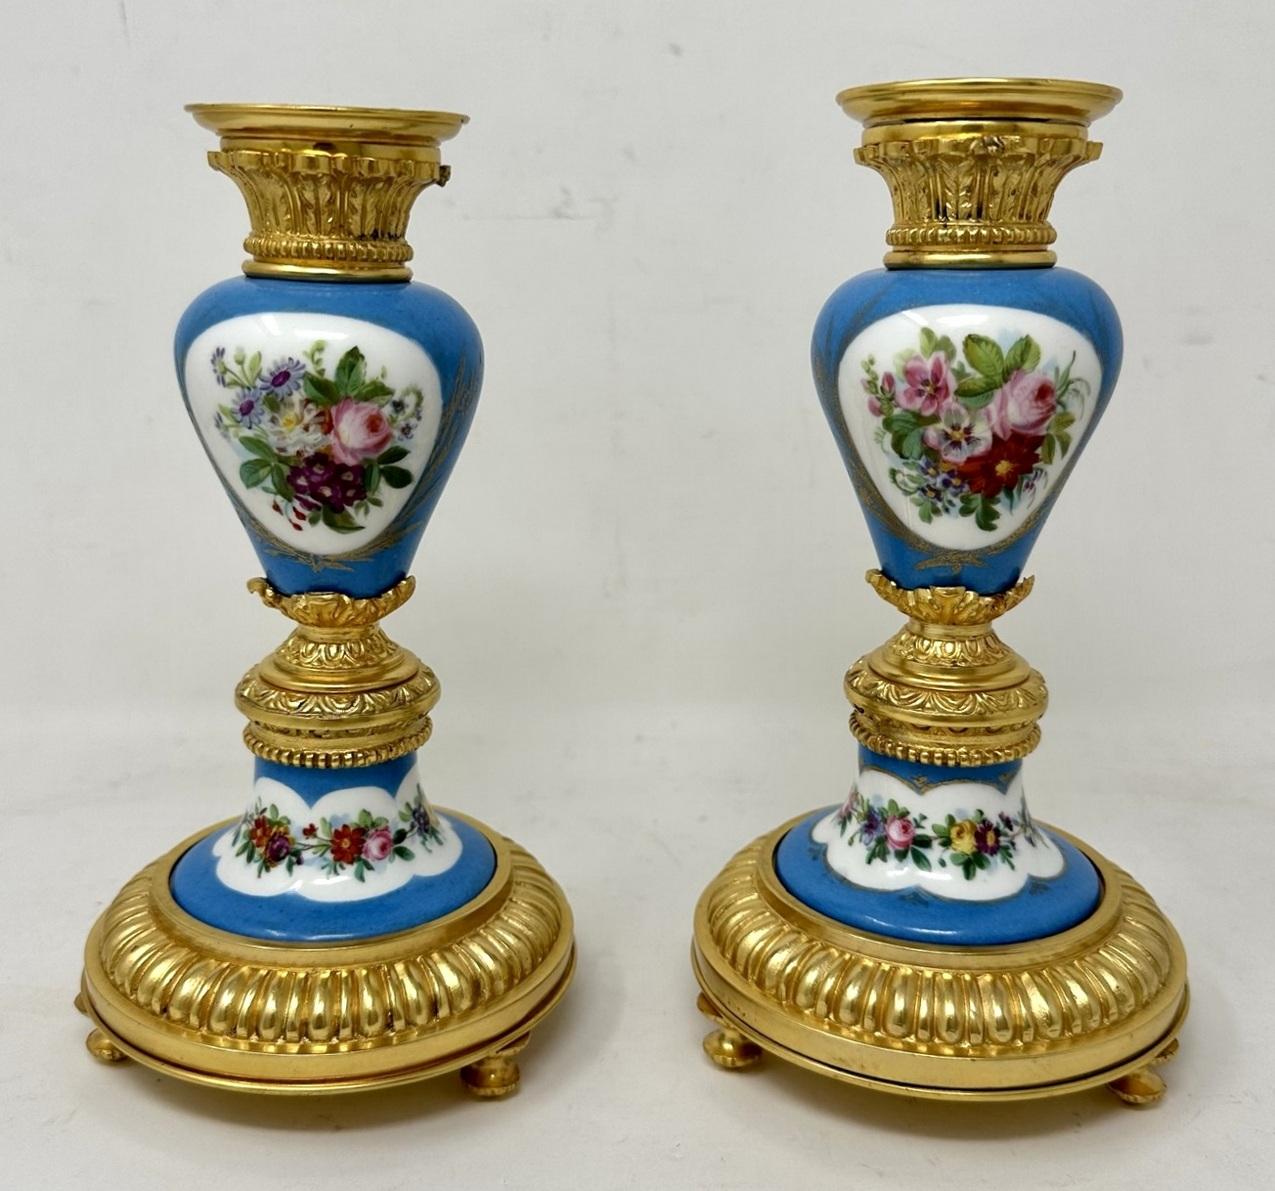 Late Victorian Antique Pair Ormolu Sèvres Porcelain Gilt Bronze Celeste Candlesticks Candelabra